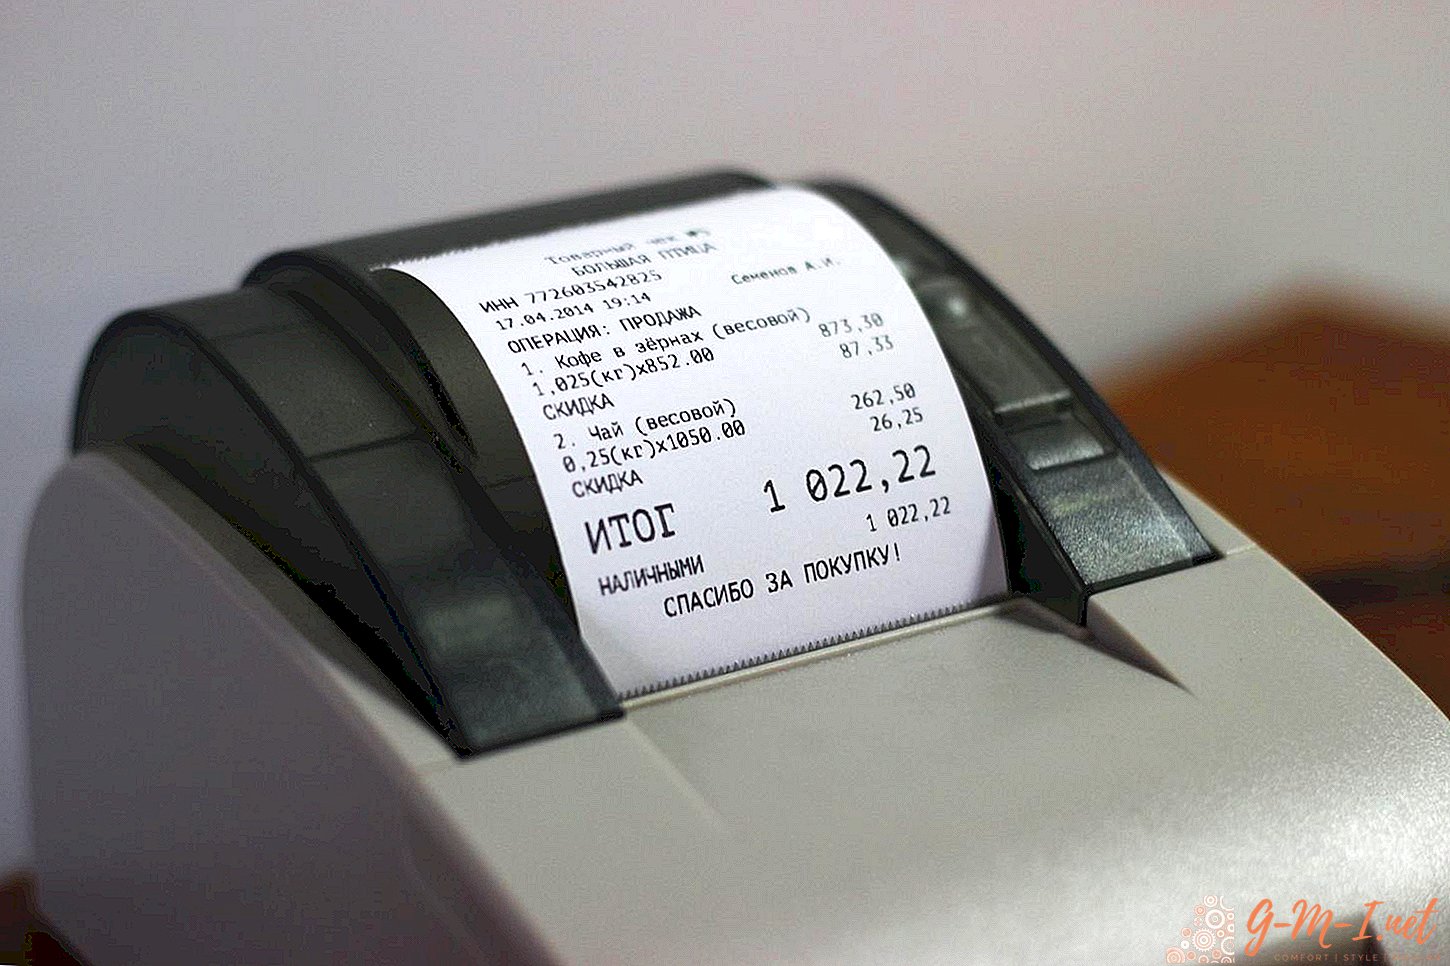 How to print a cash register receipt on a regular printer